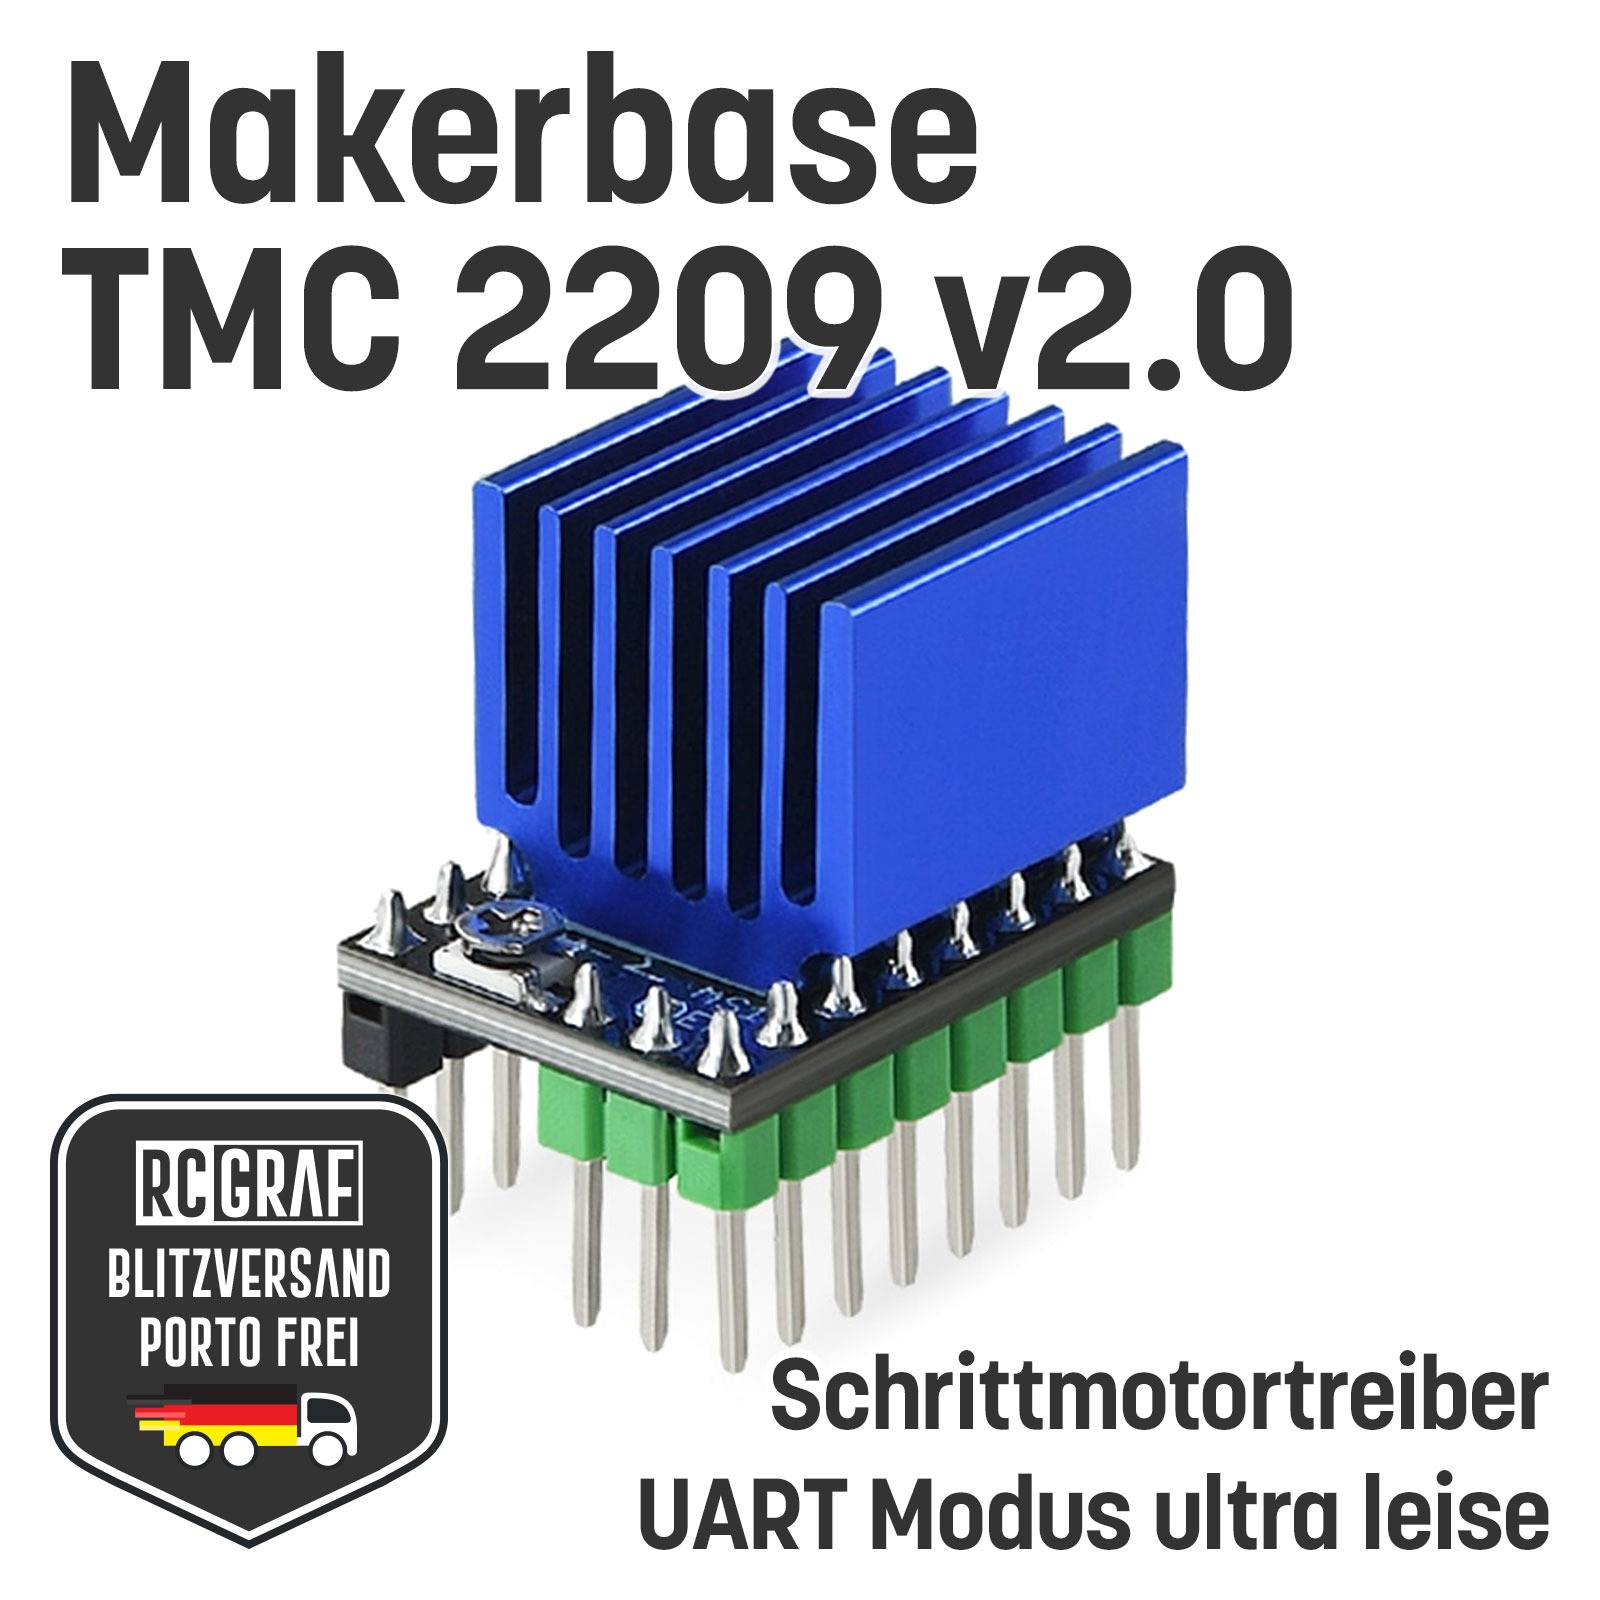 Makerbase TMC2209 V20 Schrittmotortreiber UART Modus ultra leise 6